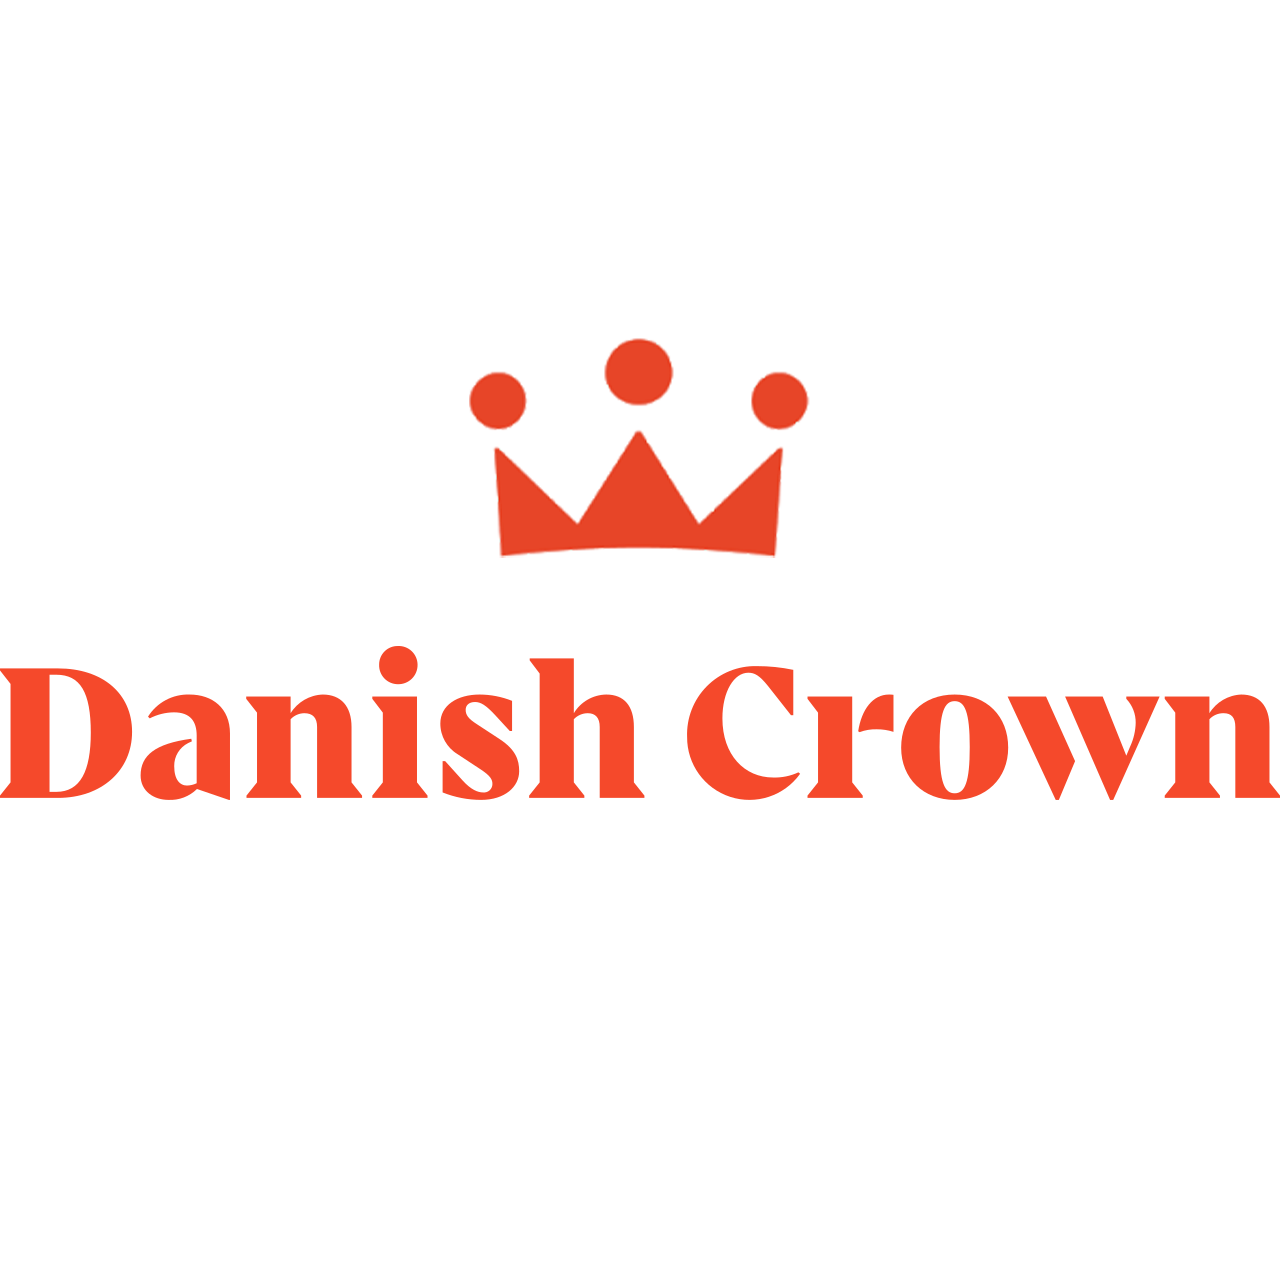 Danish Crown